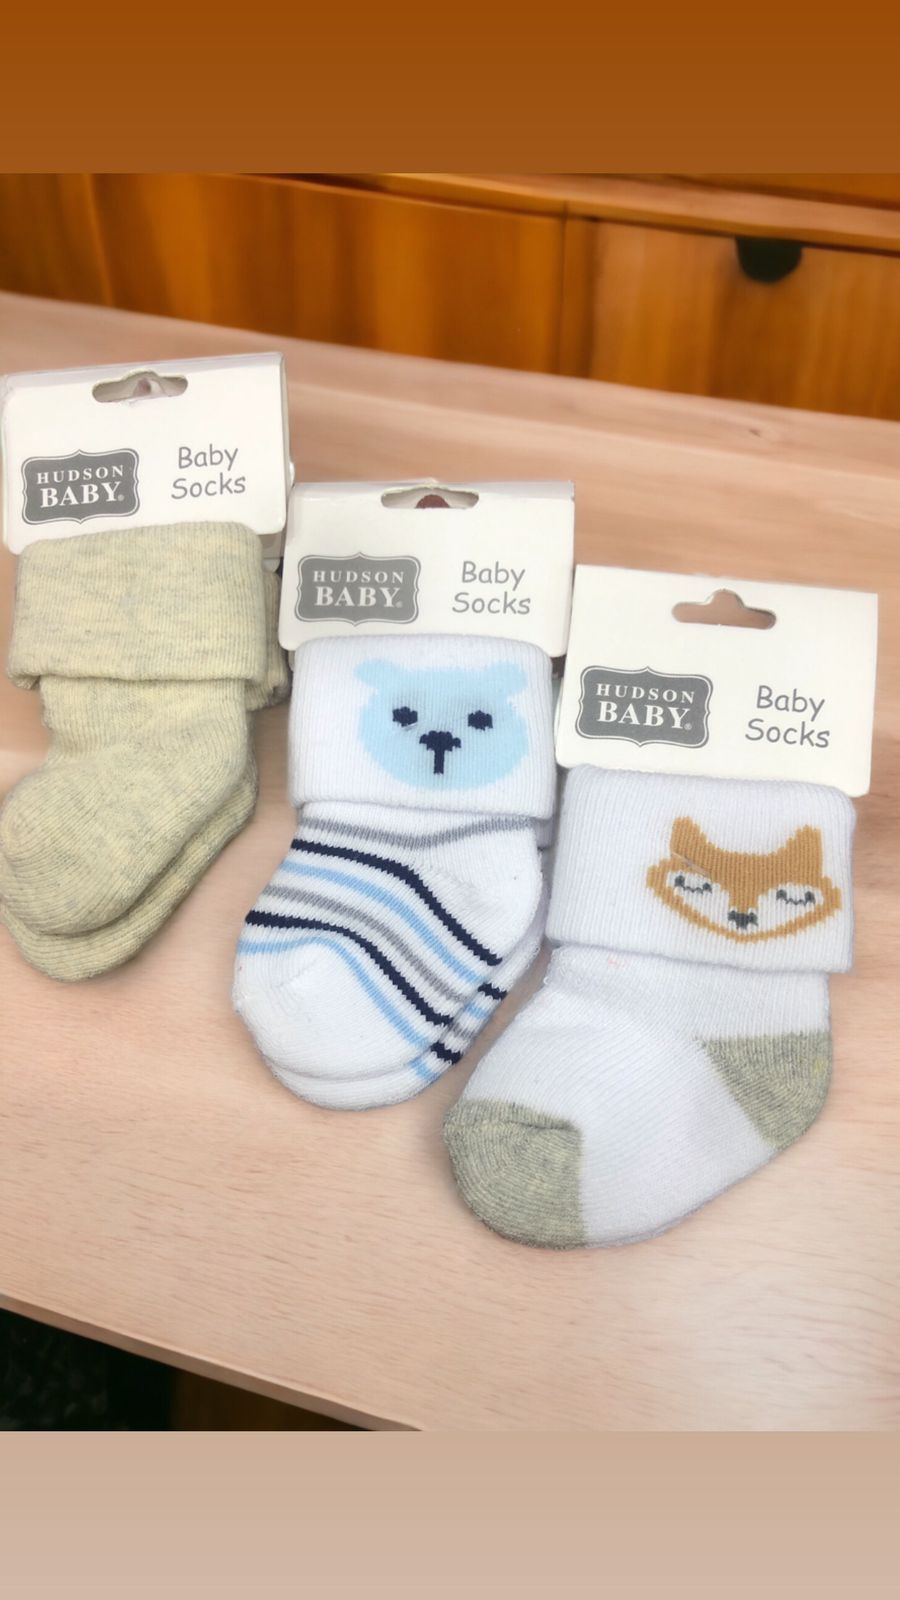 Hudsone baby socks